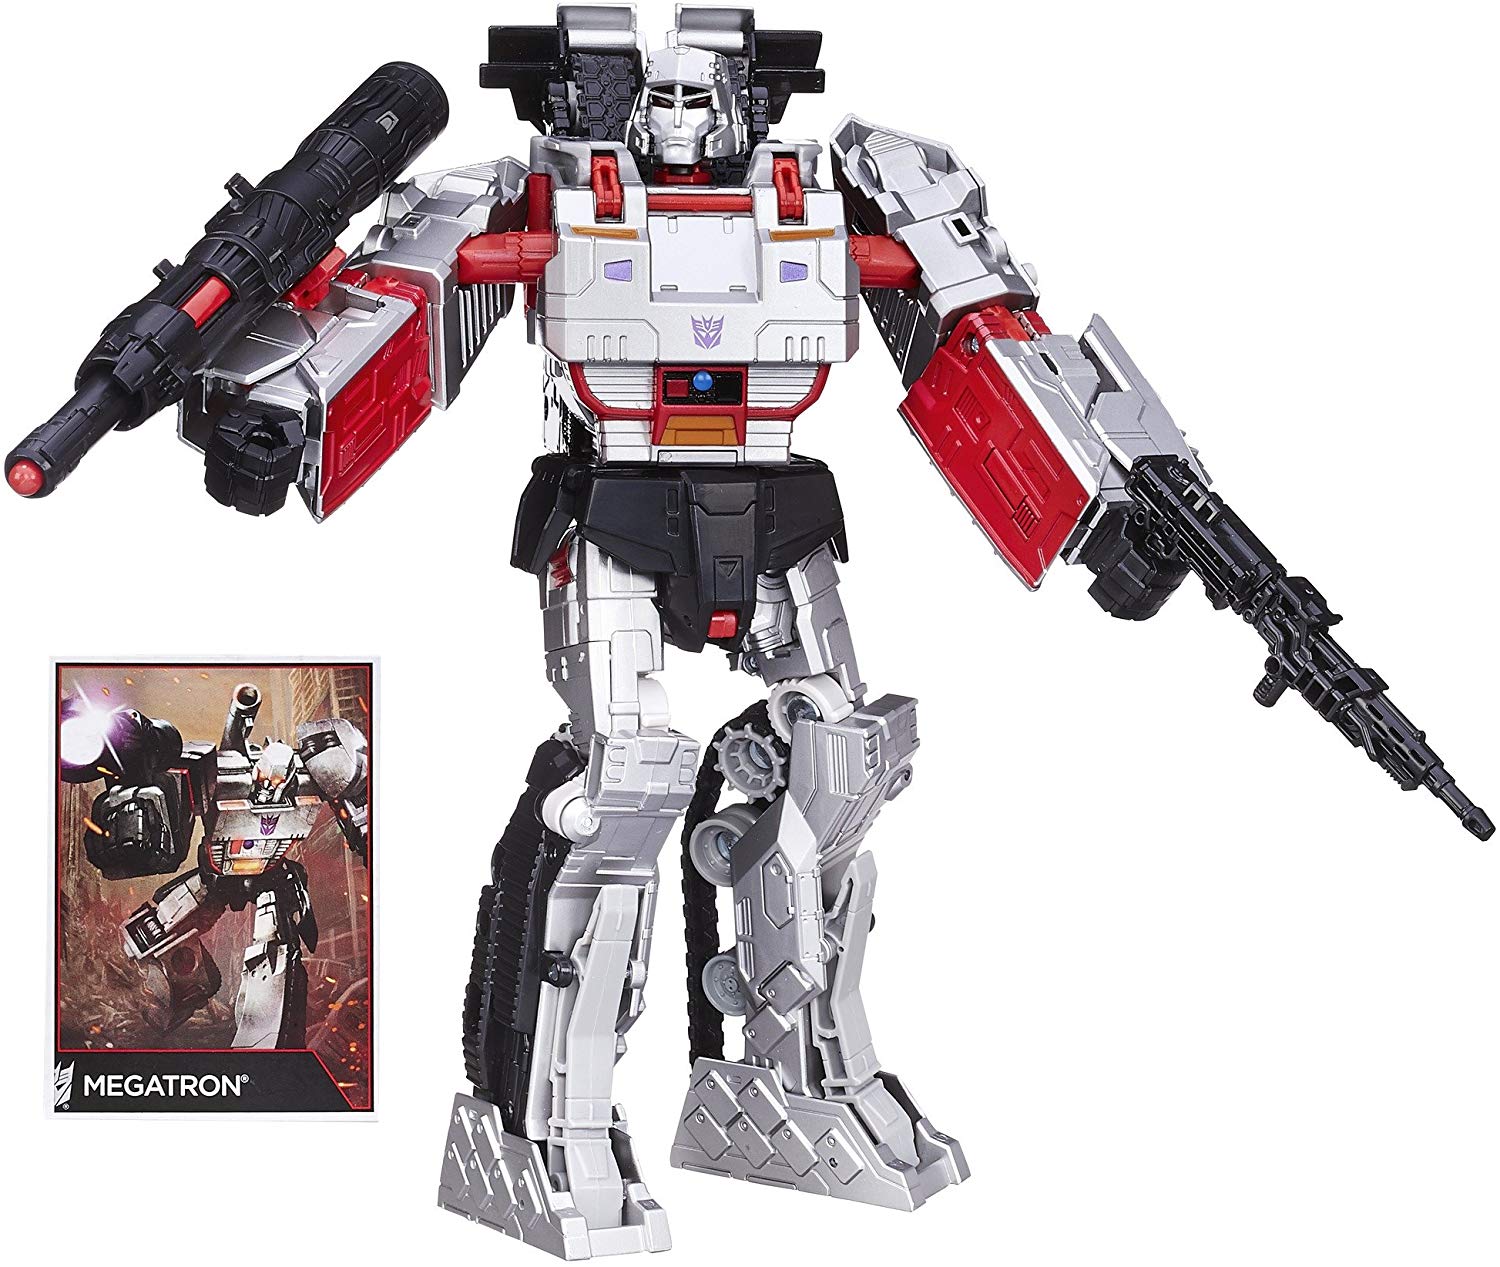 Transformers Generations Combiner Wars Leader Class Megatron Action Figure 2